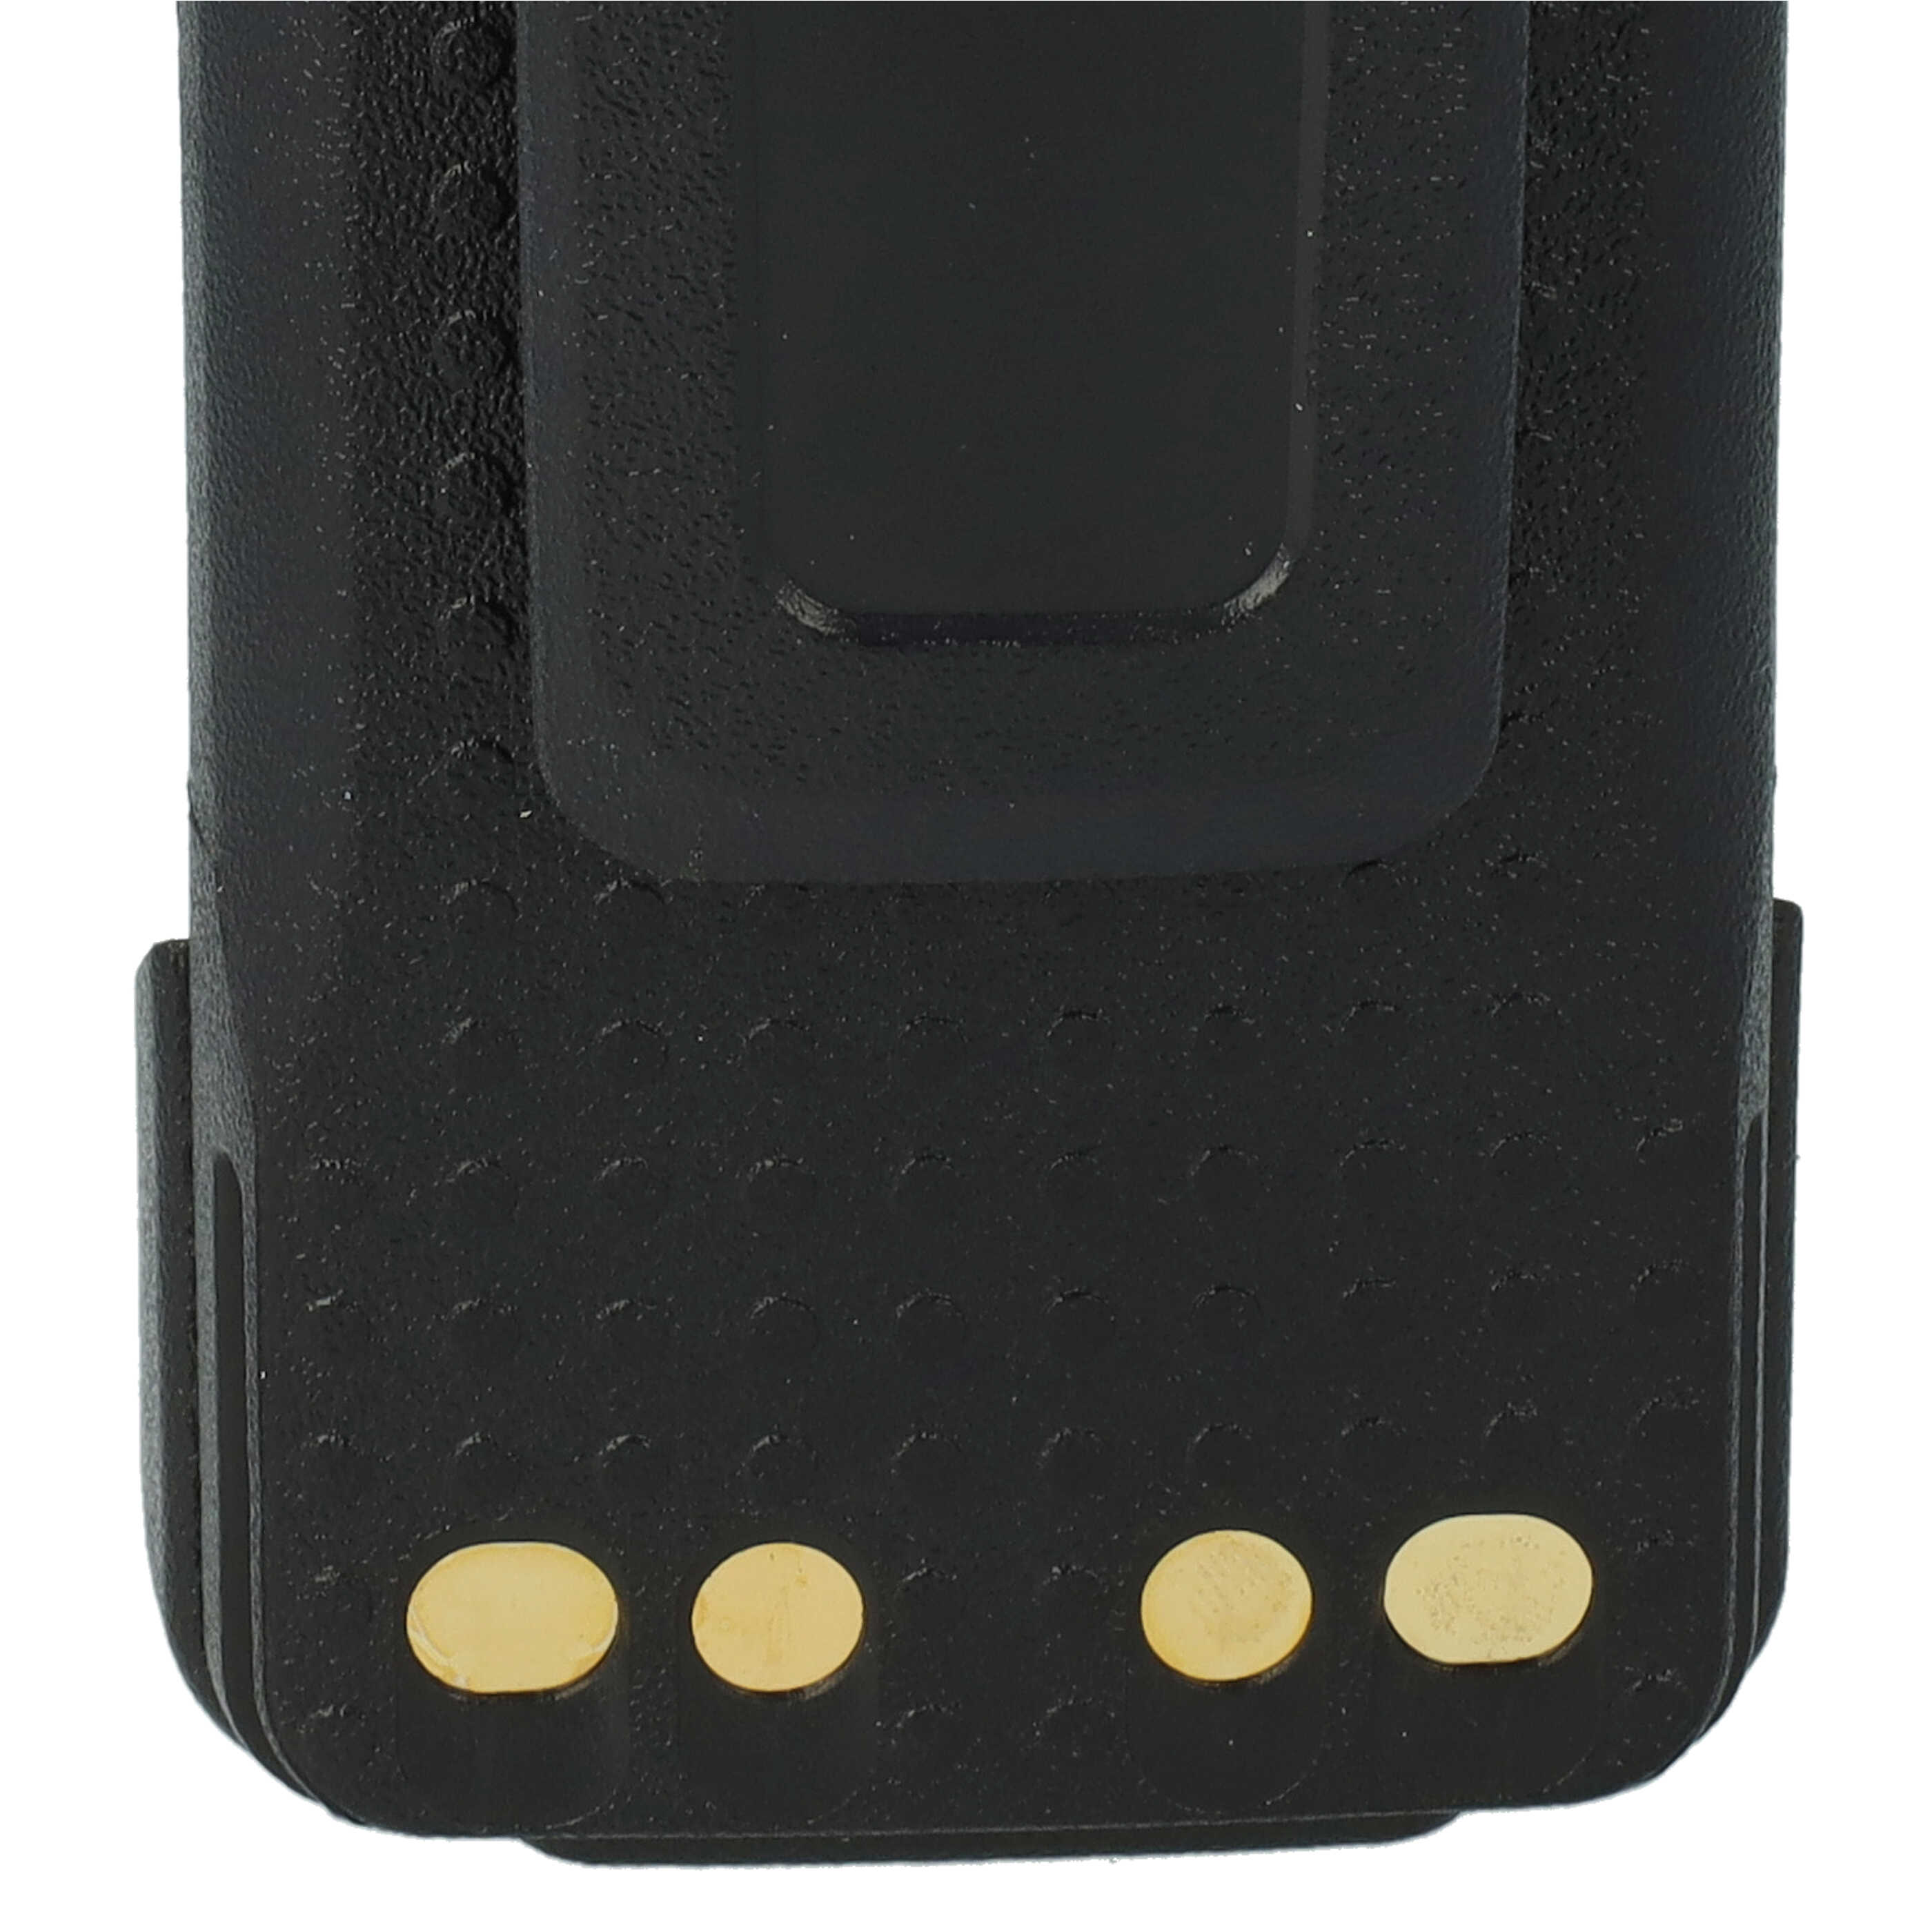 Akumulator do radiotelefonu zamiennik Motorola NNTN8560A - 2500 mAh 7,4 V Li-Ion + klips na pasek